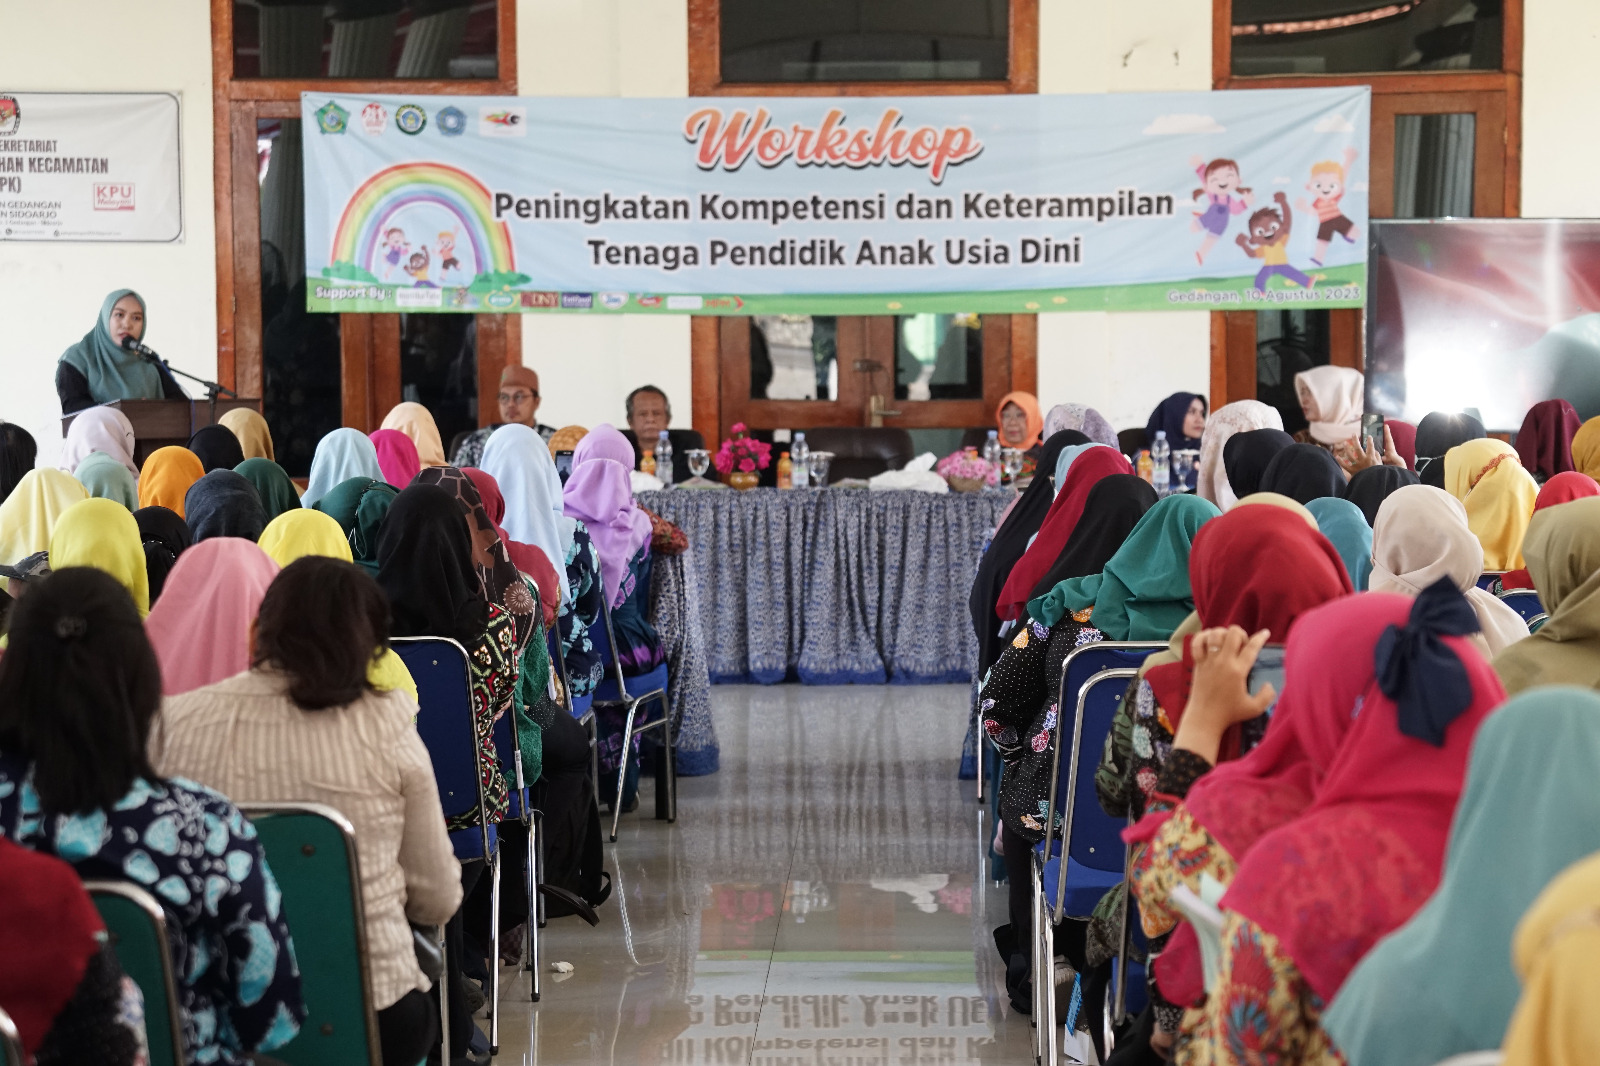 Bunda PAUD Kabupaten Sidoarjo Membuka Workshop Peningkatan Kompetensi Tenaga Pendidik Anak Usia Dini